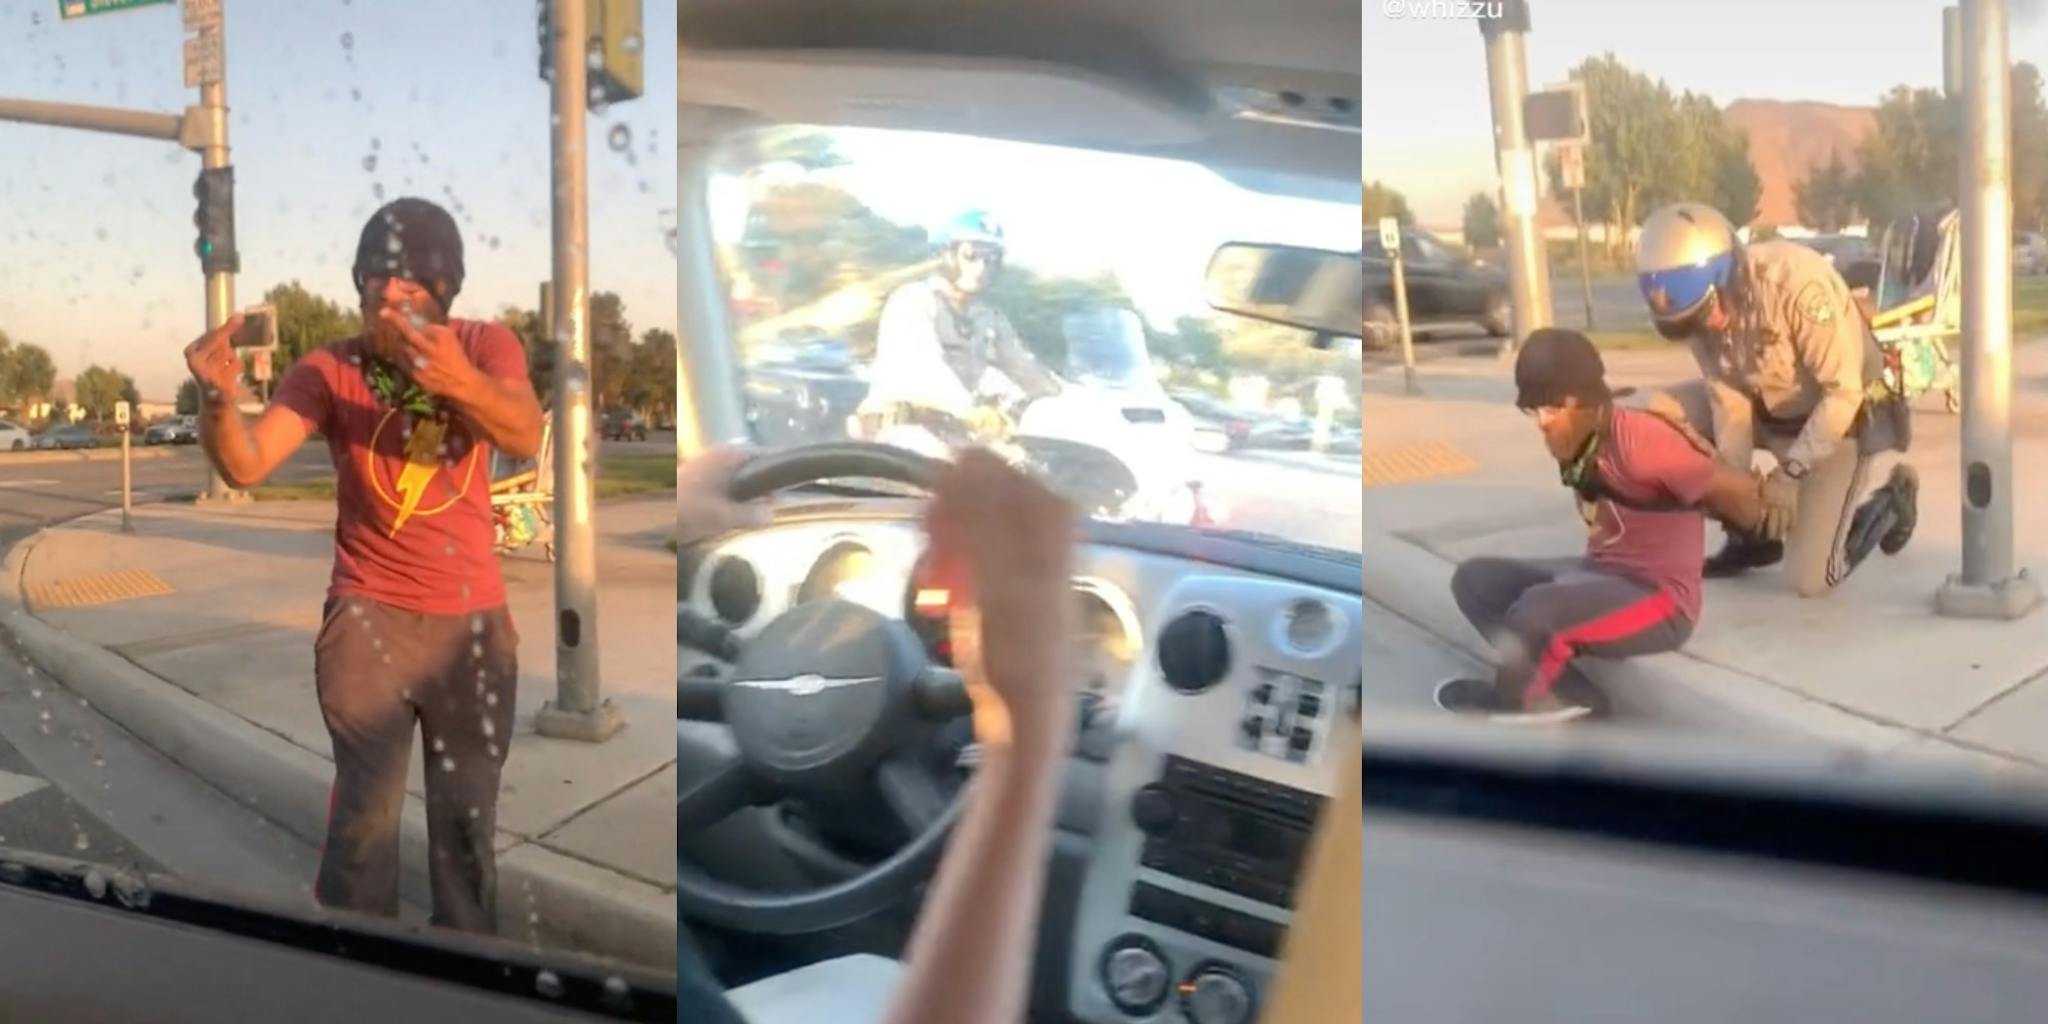 TikTok Shows Homeless Man Arrested After Kicking Car, Dividing Viewers